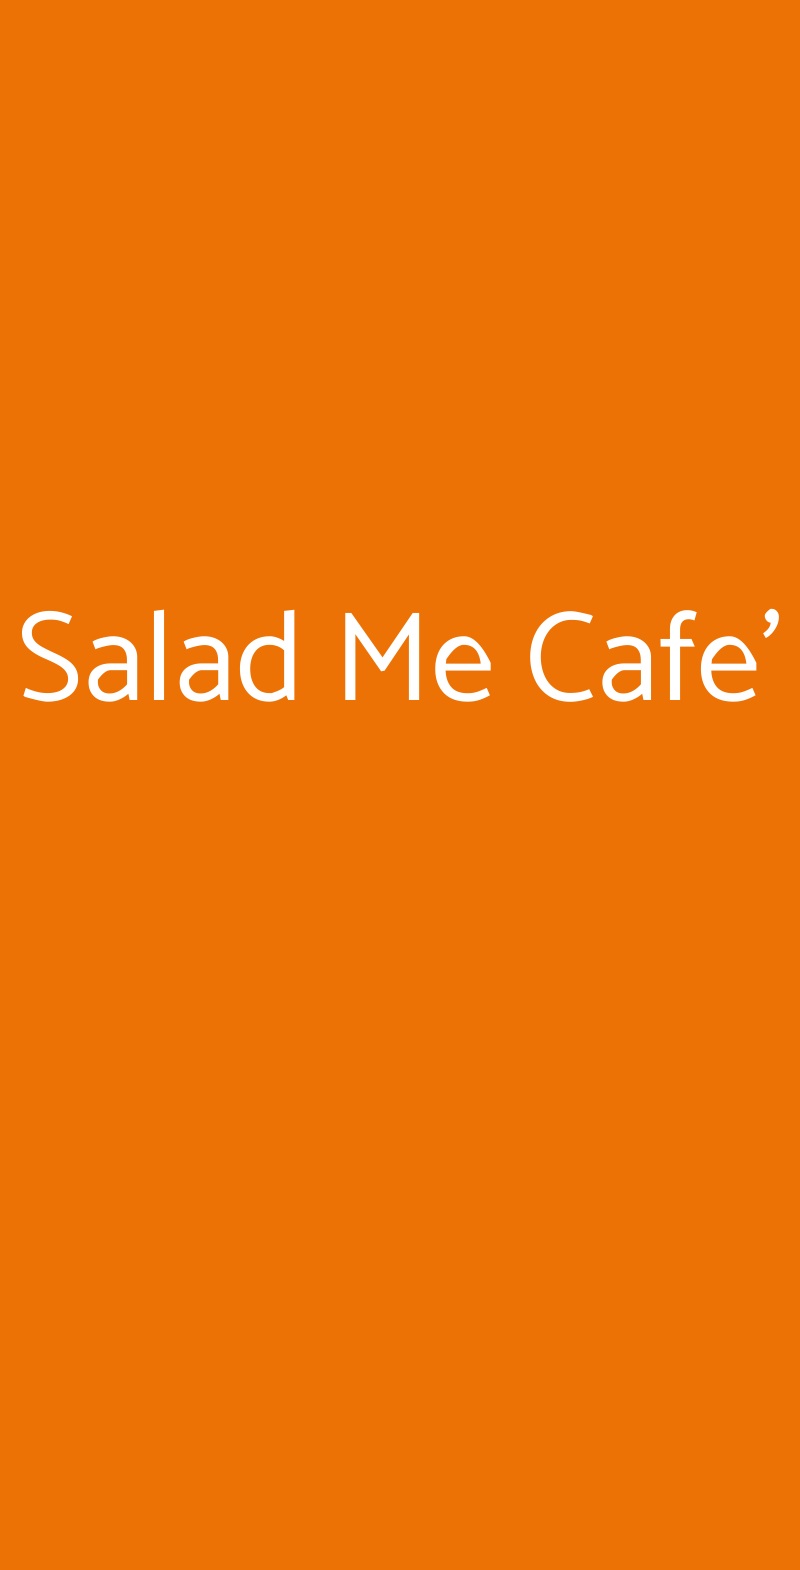 Salad Me Cafe' Milano menù 1 pagina